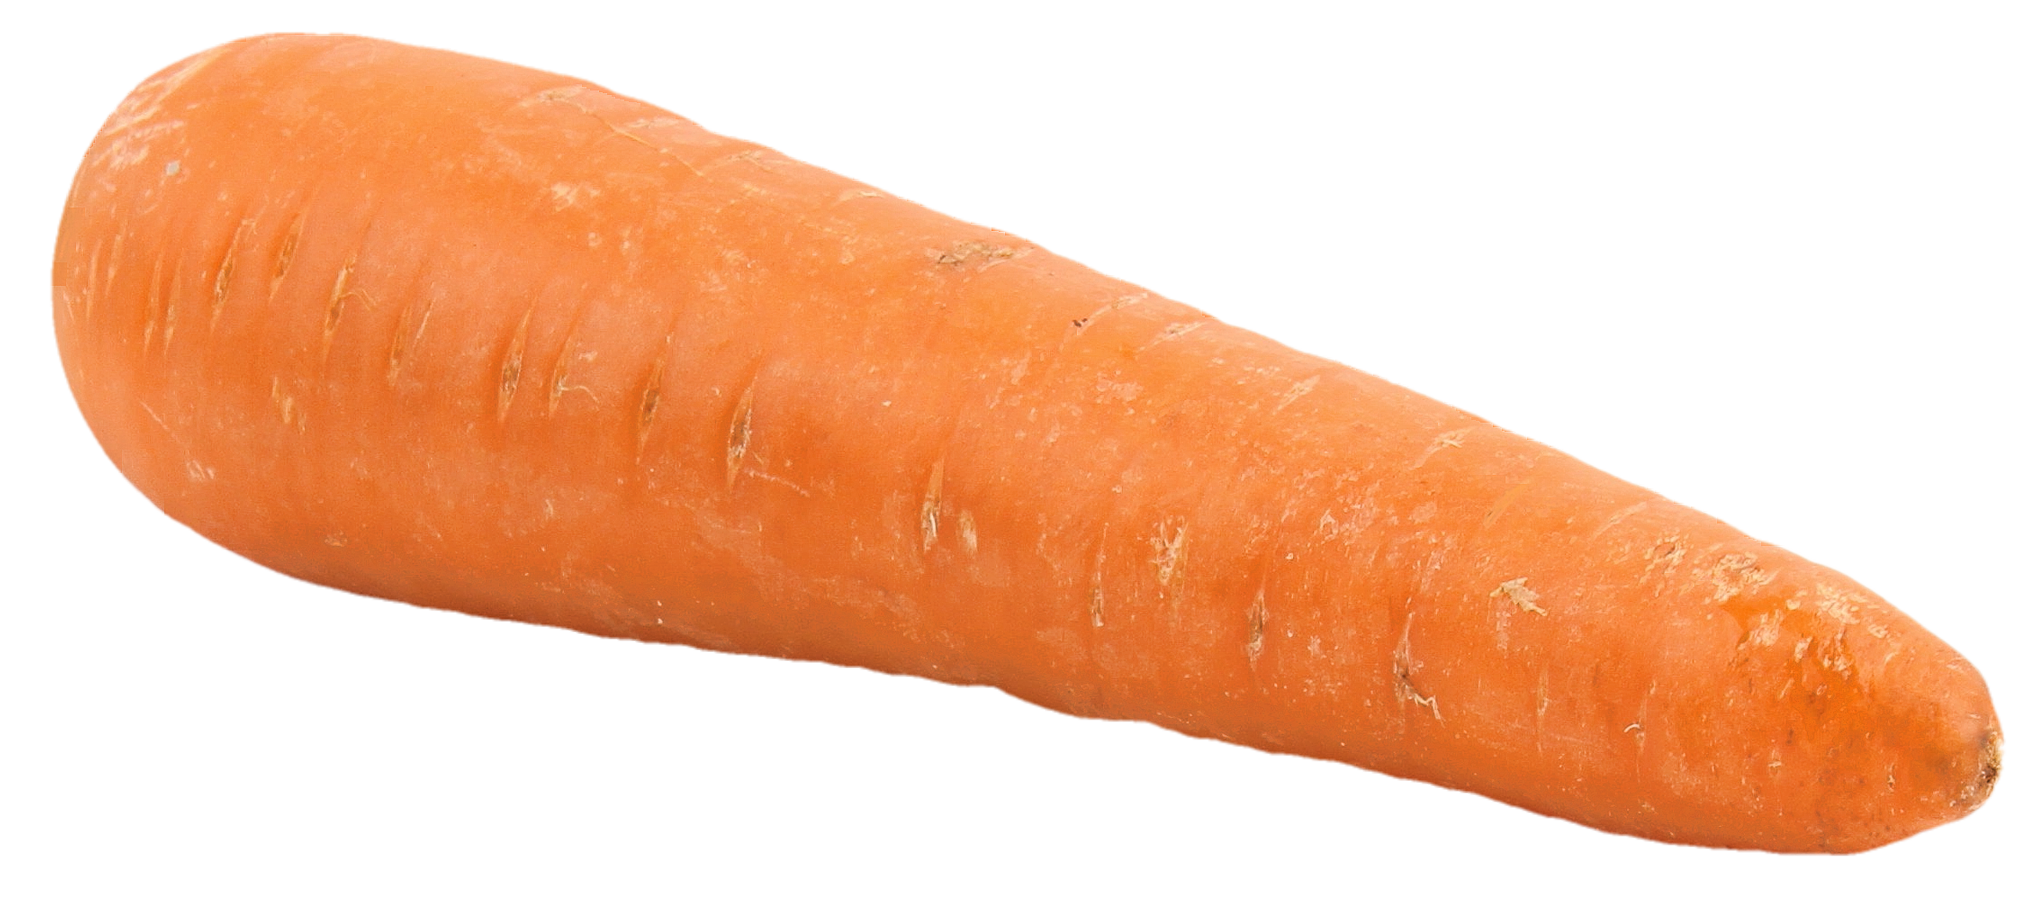 Big Carrot Png - Carrot, Transparent background PNG HD thumbnail